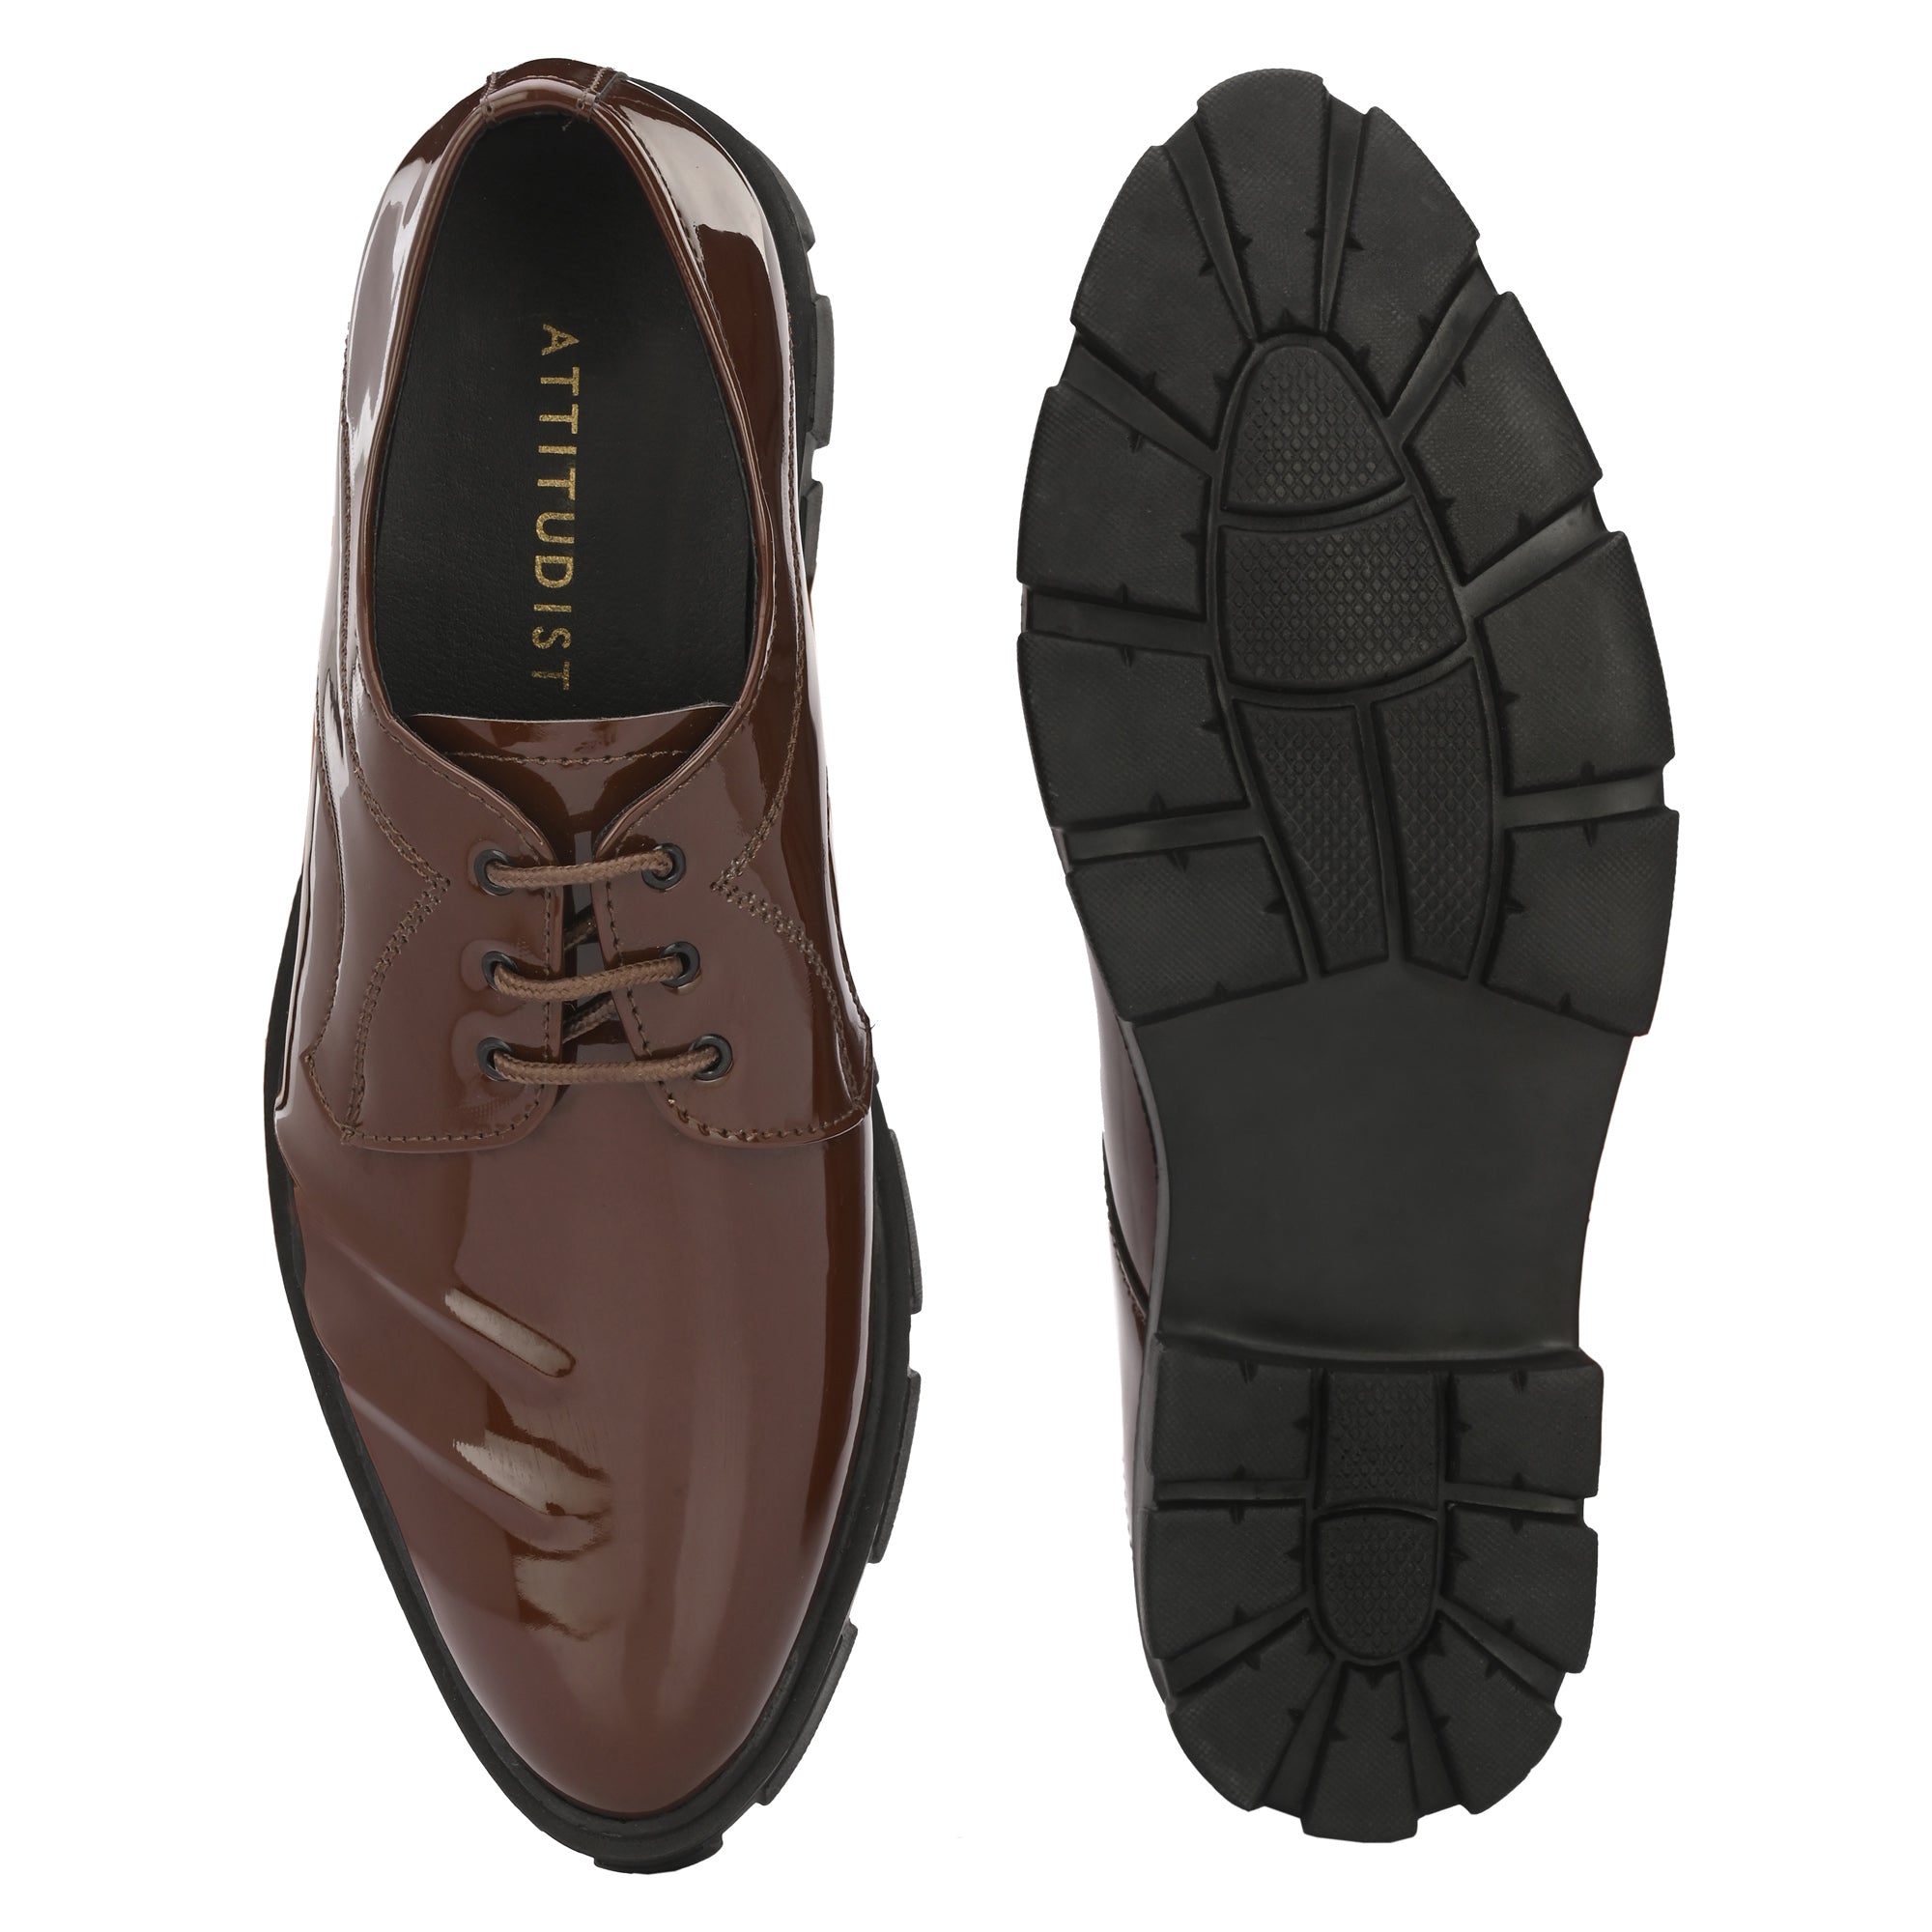 attitudist-brown-super-glossy-formal-derby-shoes-for-men